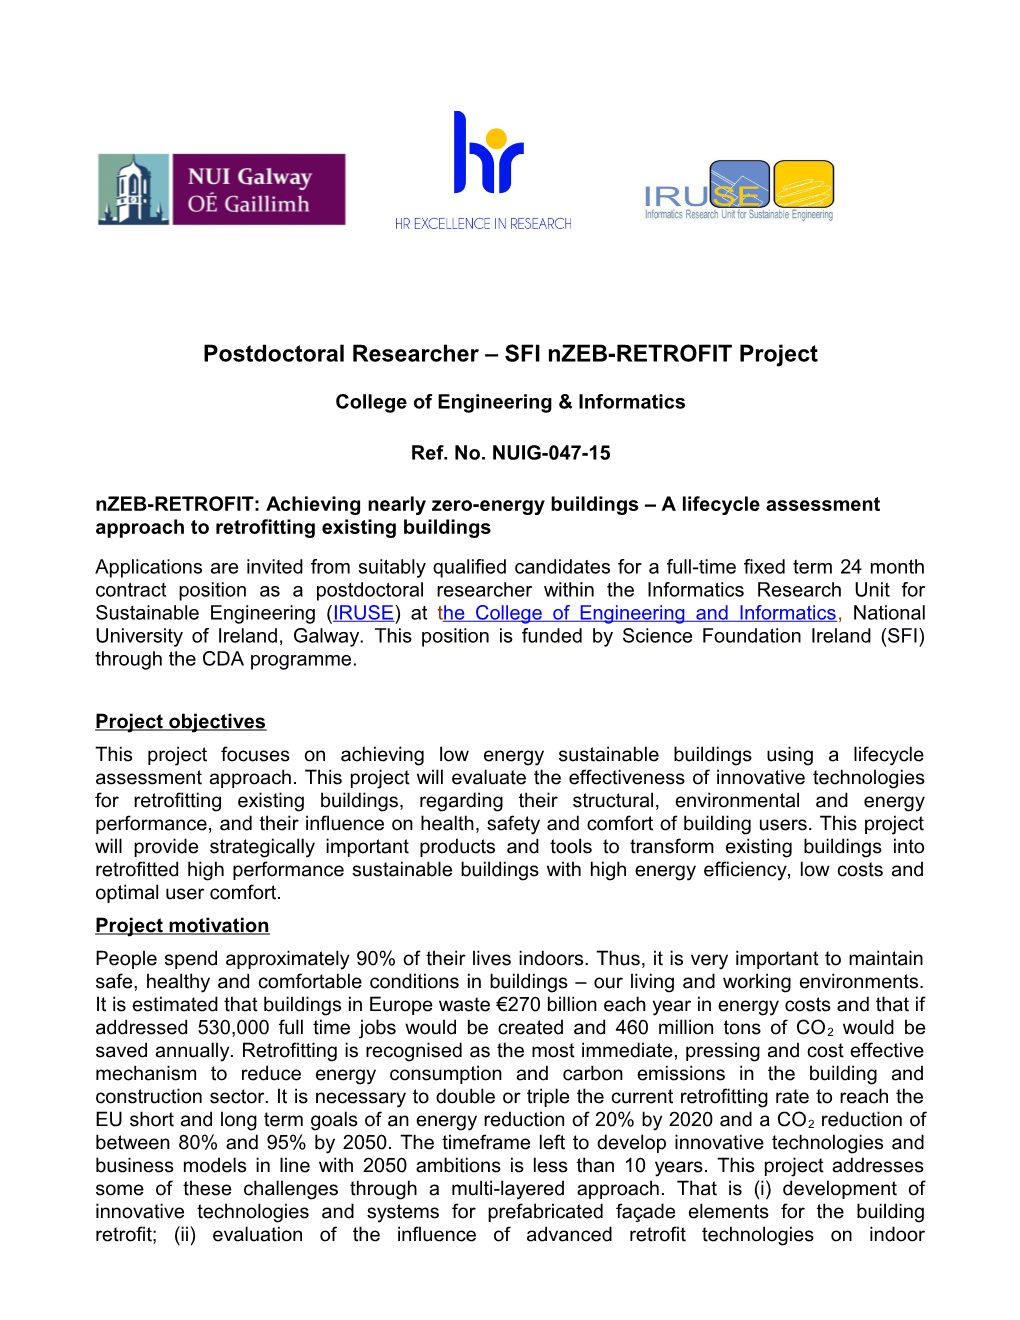 Postdoctoral Researcher SFI Nzeb-RETROFIT Project